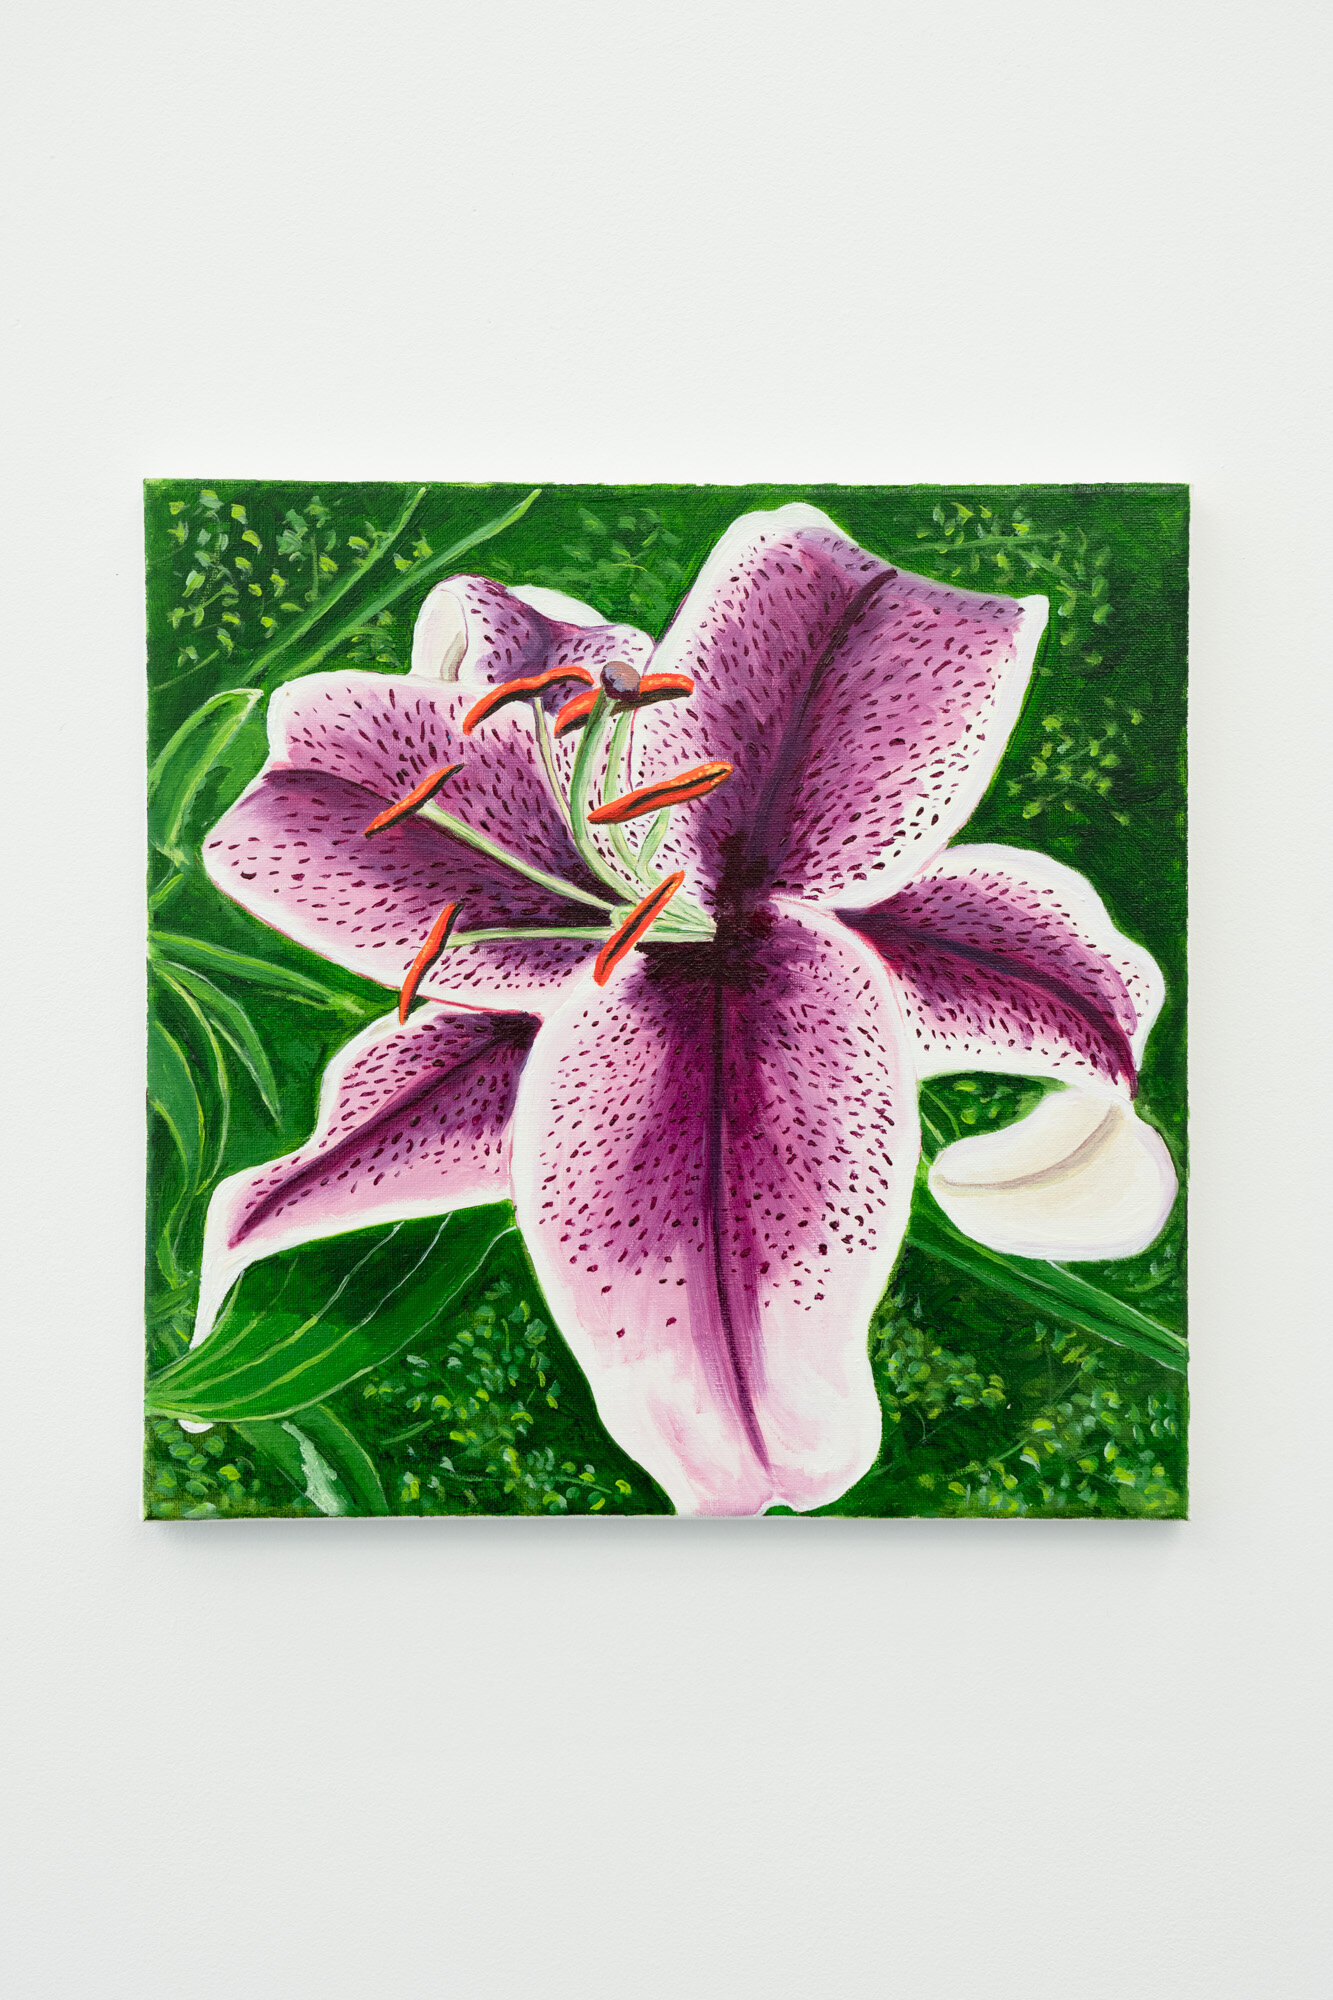  Shana Sharp  Violet Star Gazer Lily , 2019 Oil on canvas 14 x 14 inches 